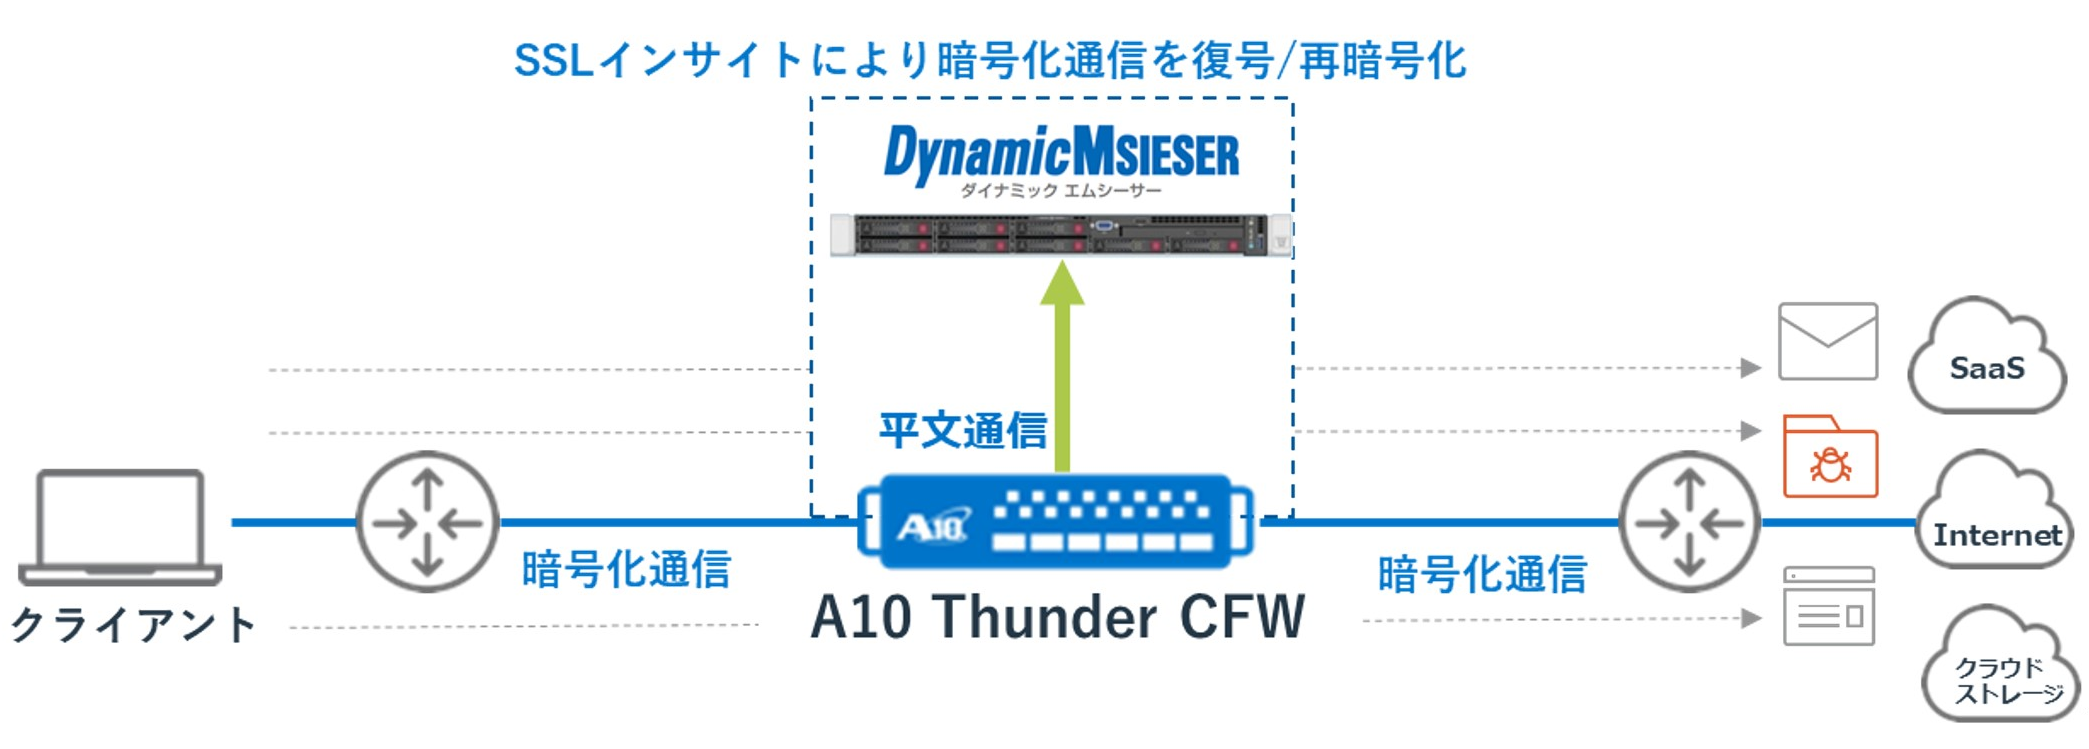 A10 Thunder CFWのSSLインサイト機能とDynamic MSIESERの連携：イメージ図